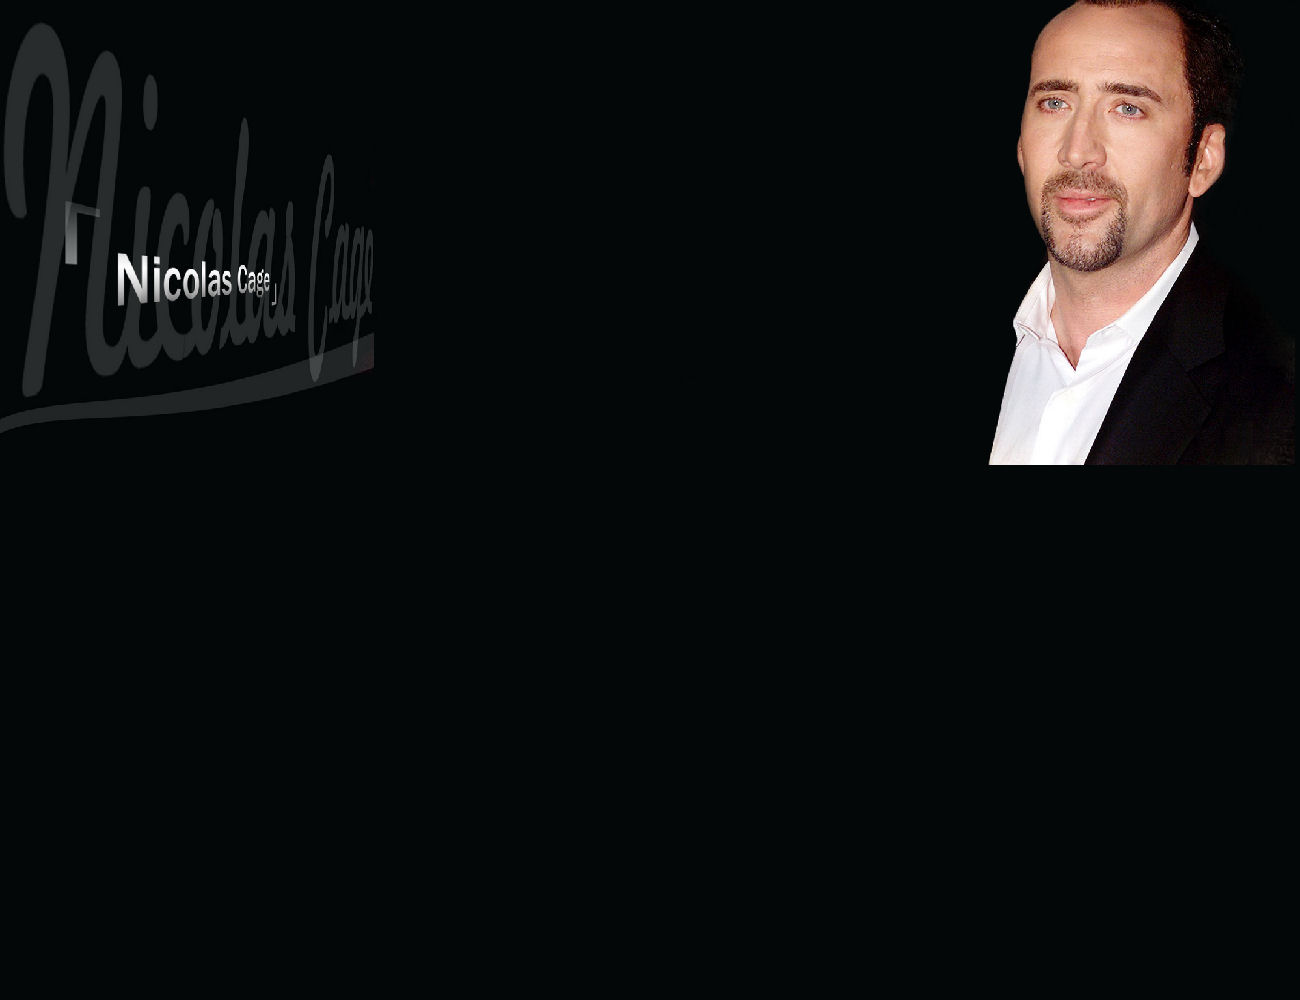 Nicolas Cage Background Themes